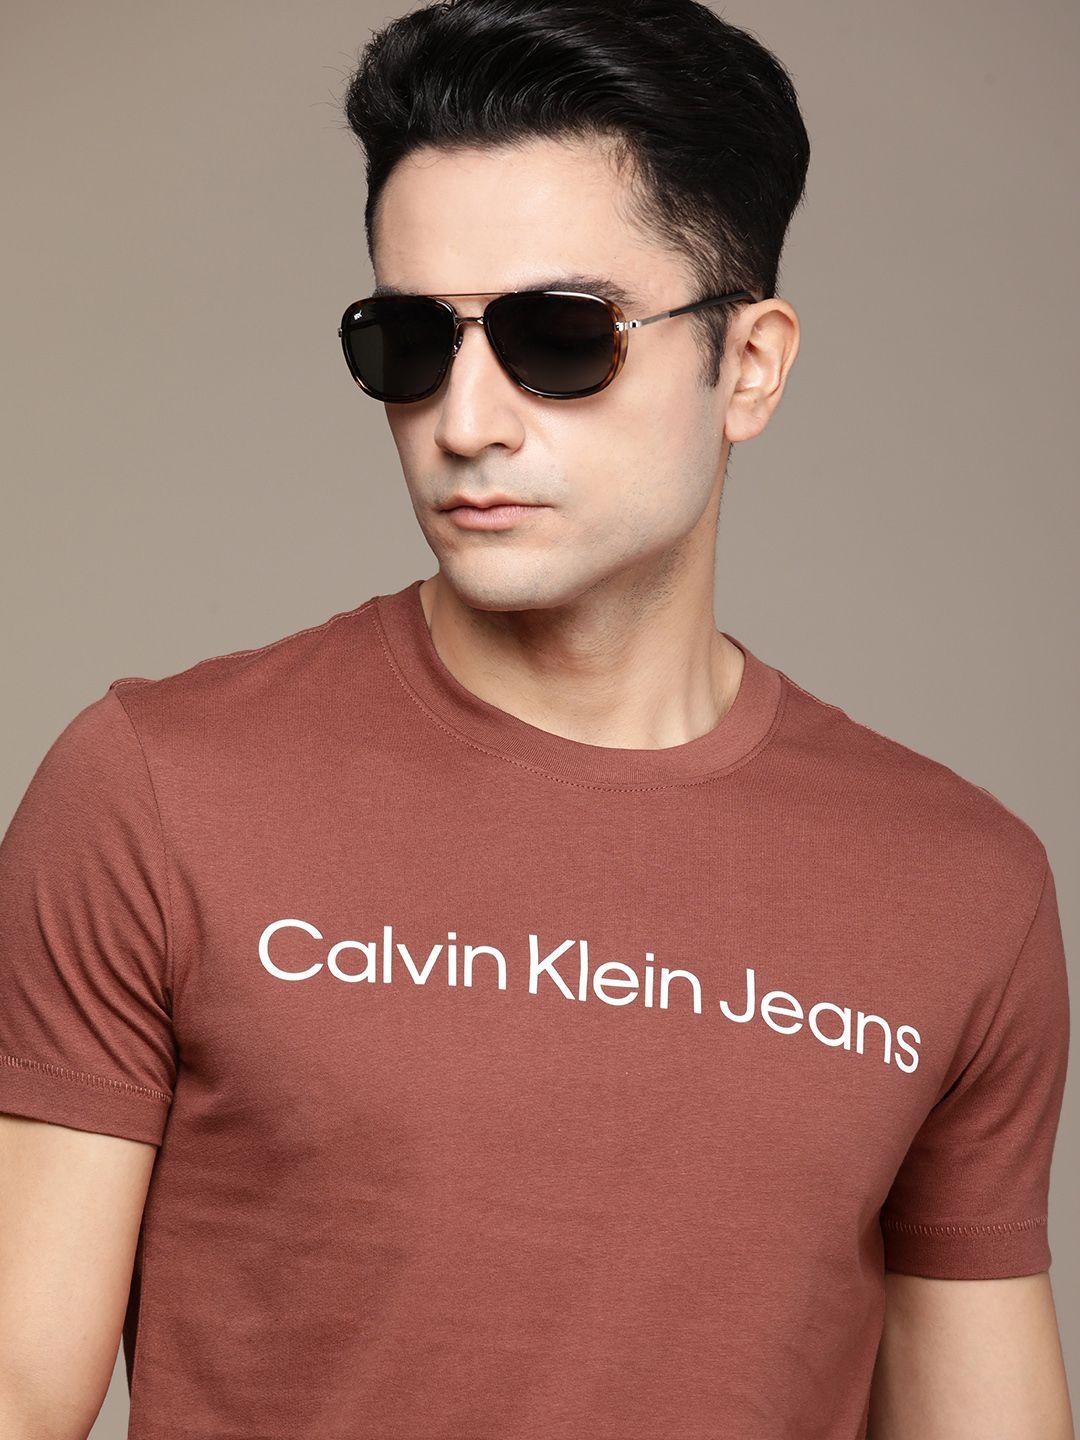 calvin klein jeans men brown & white brand logo printed pure cotton compression t-shirt